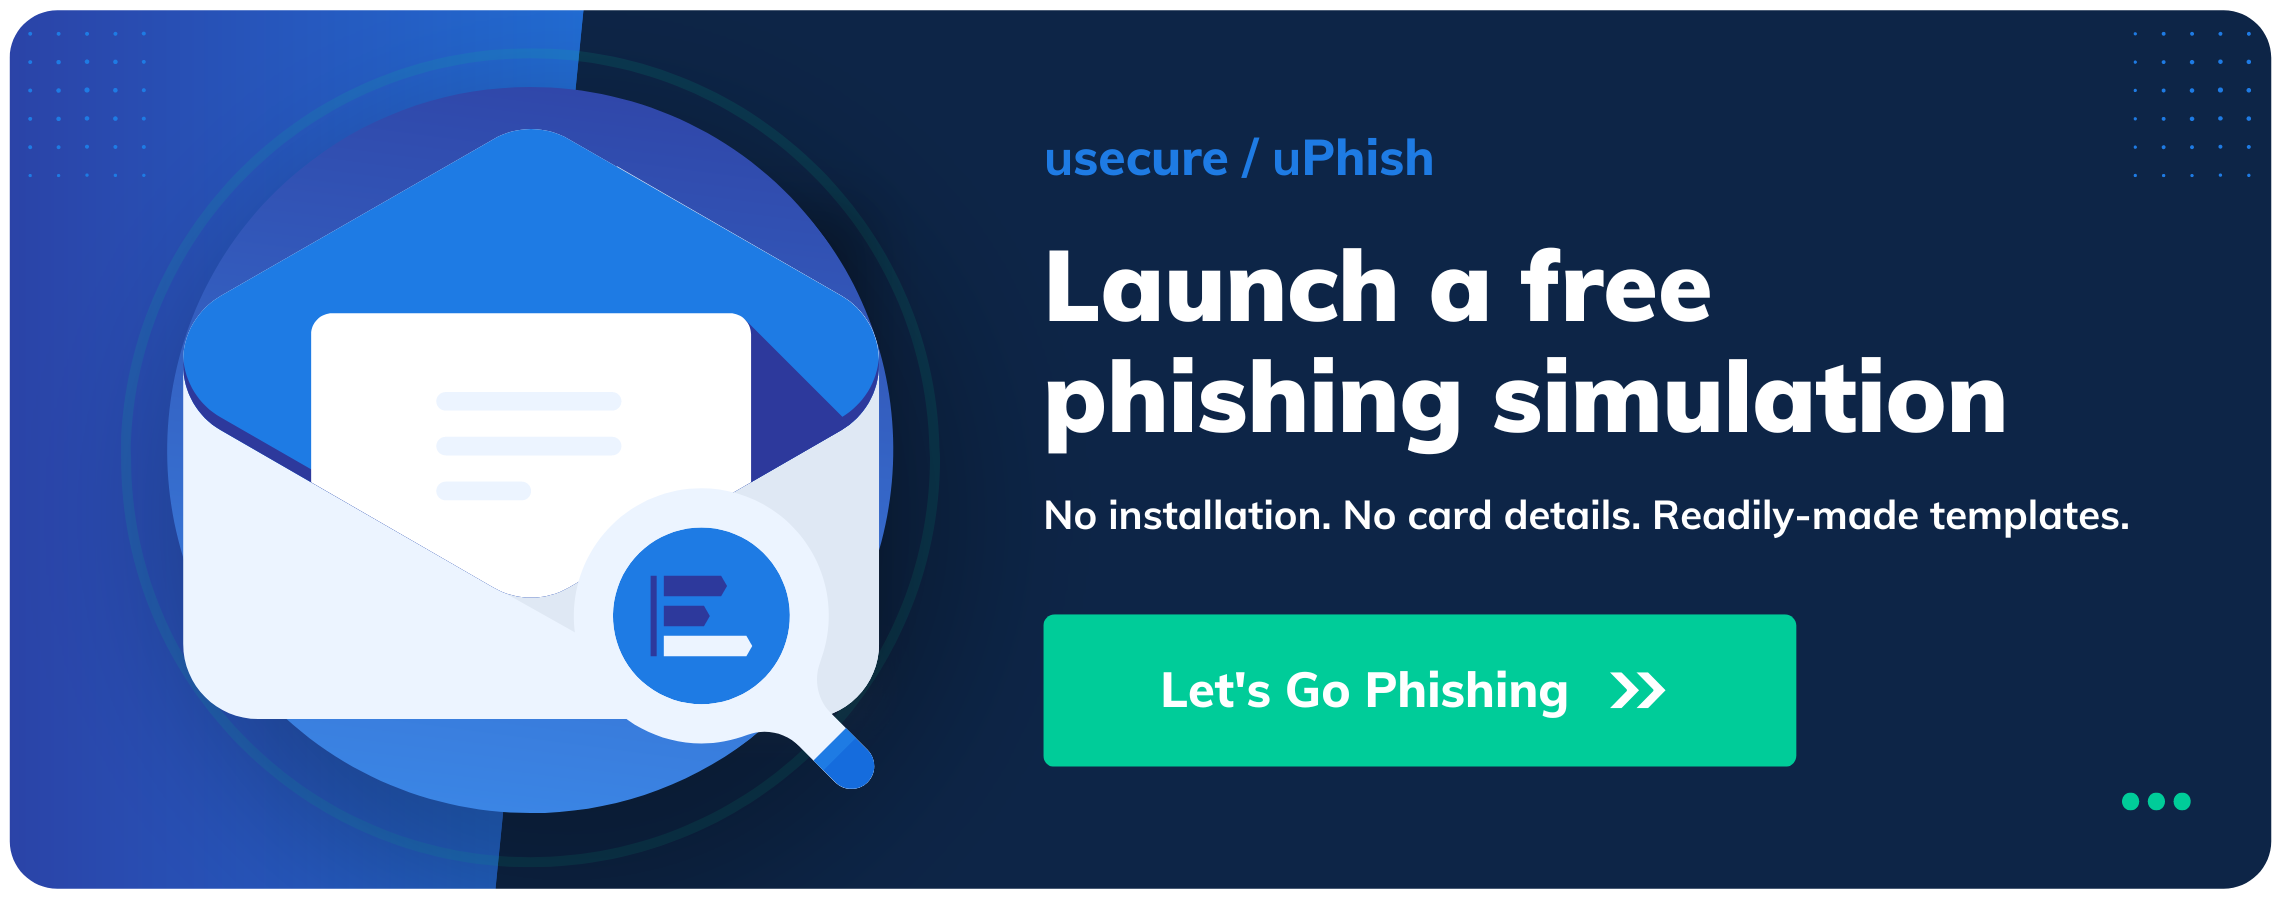 Launch a free phishing simulation